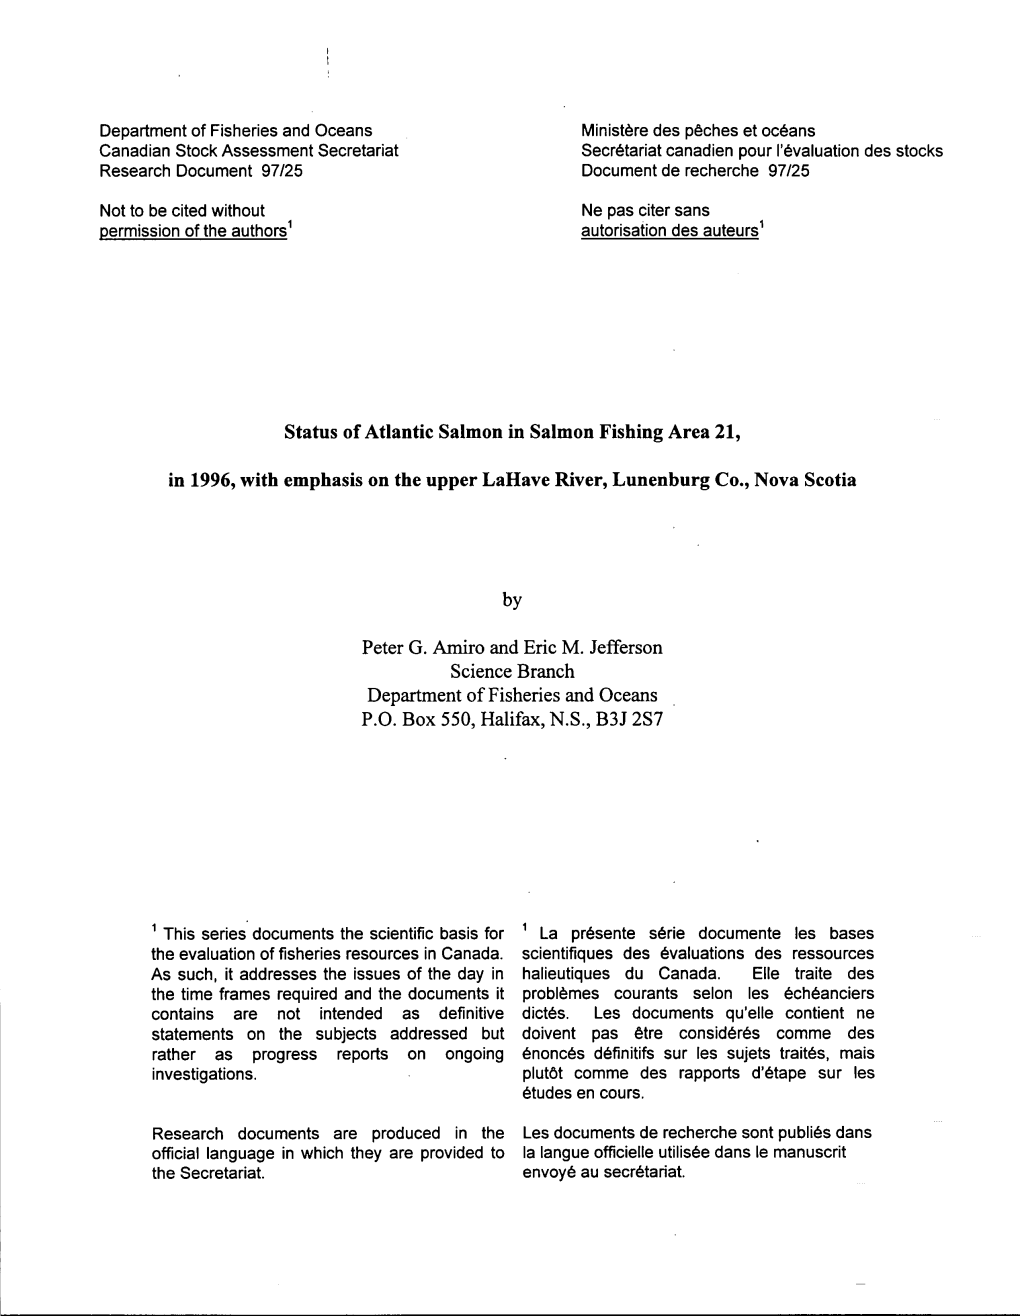 Status of Atlantic Salmon in Salomn Fishing Area 21, in 1996, With